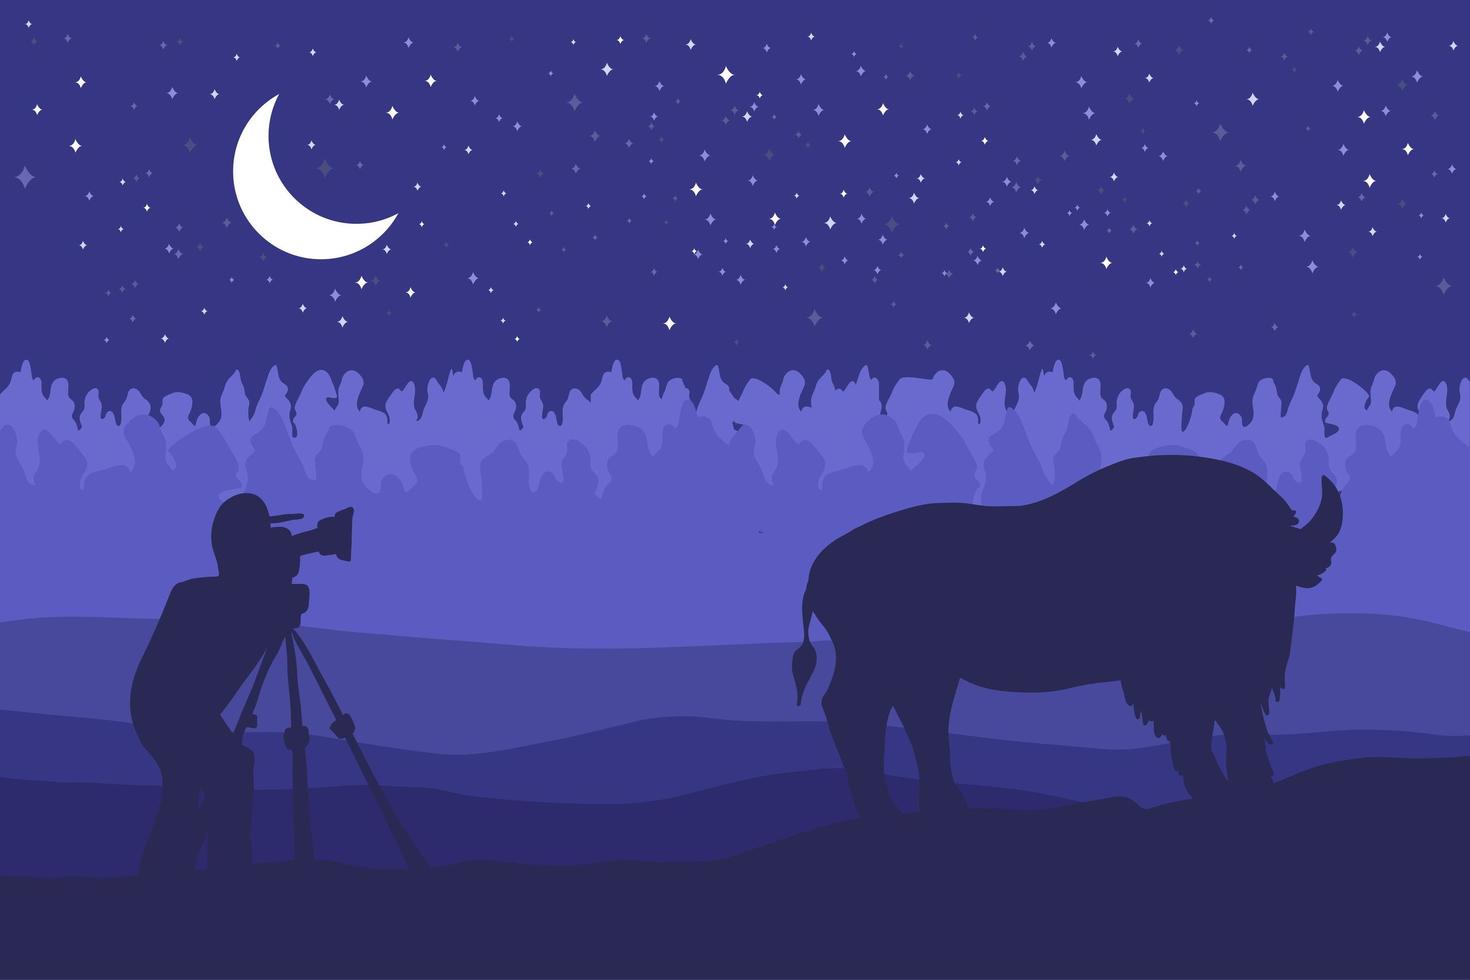 Landscape with wild bizon on field vector